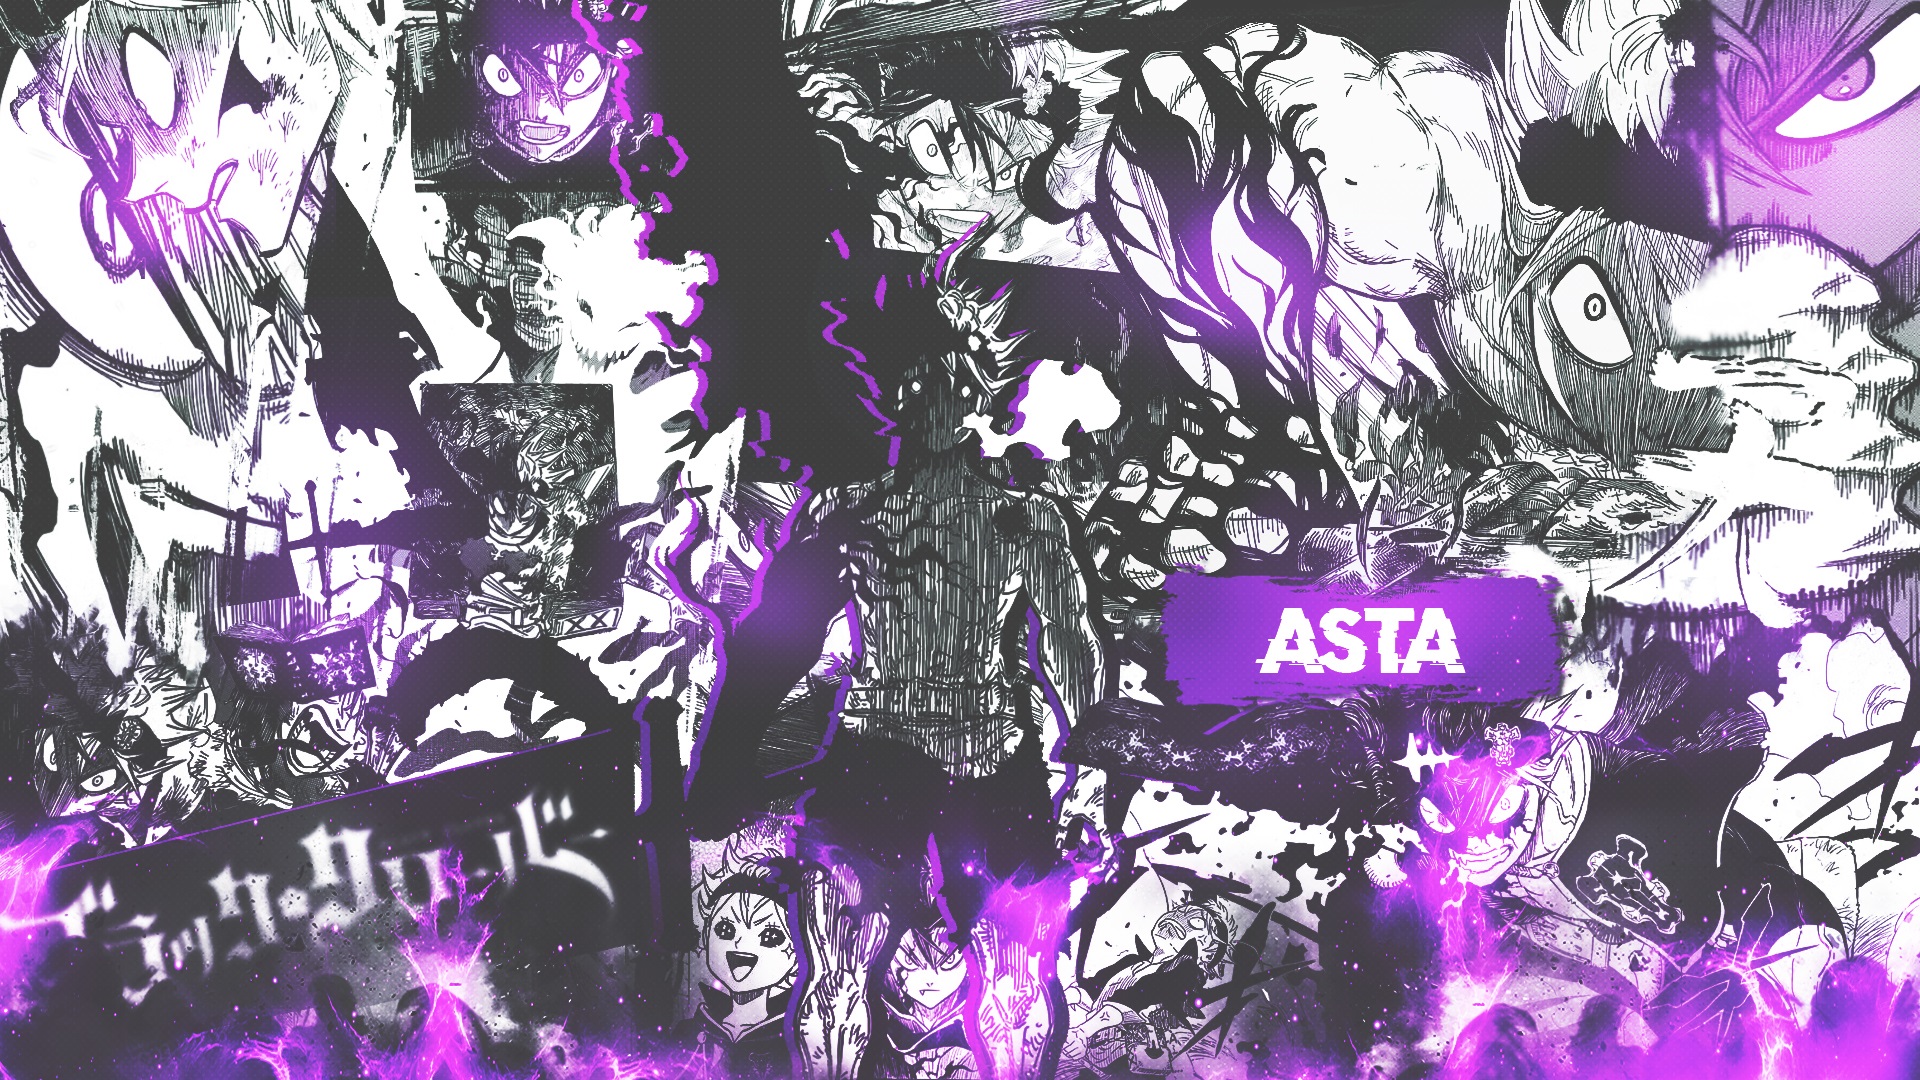 Asta (Black Clover) 1080P, 2K, 4K, 5K HD wallpapers free download